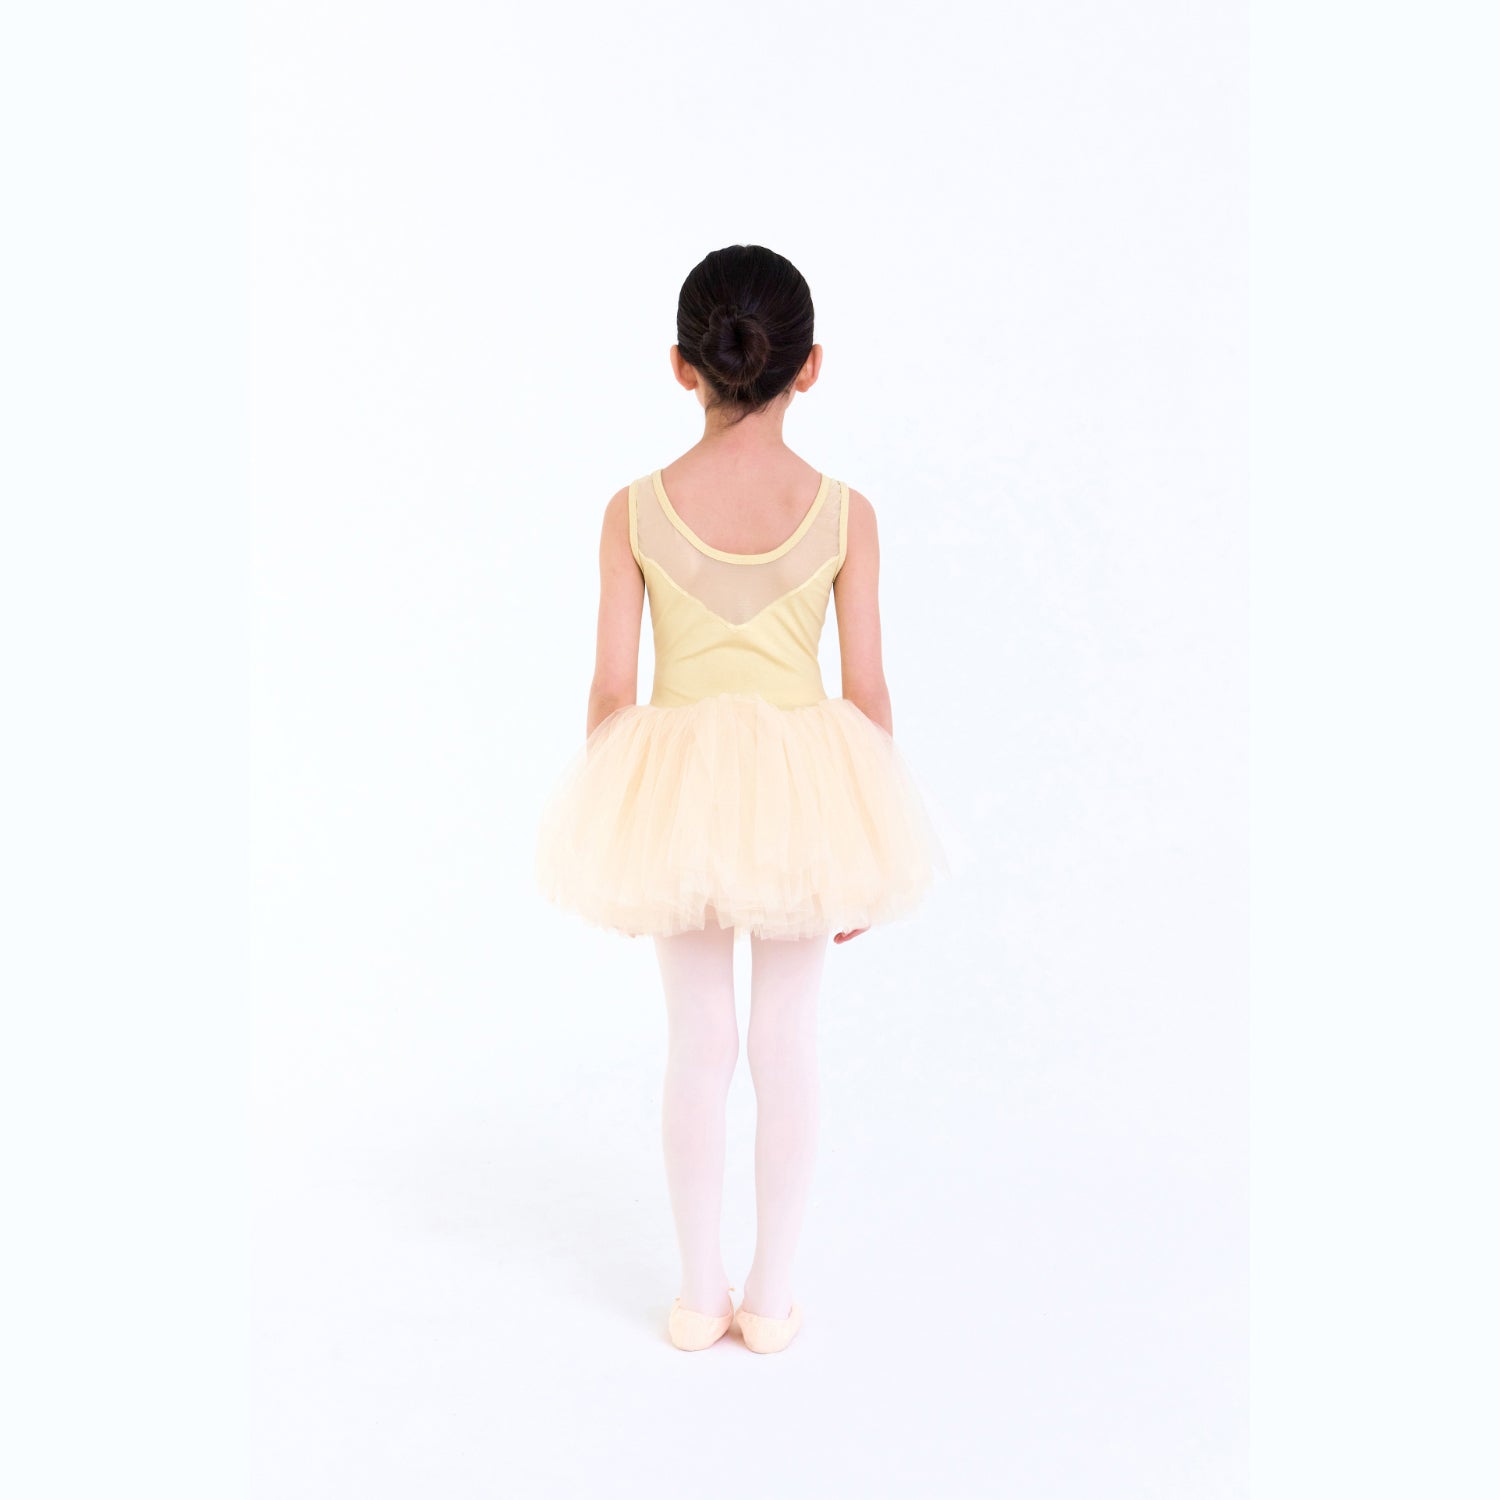 Girls Yellow Ballet Onesies